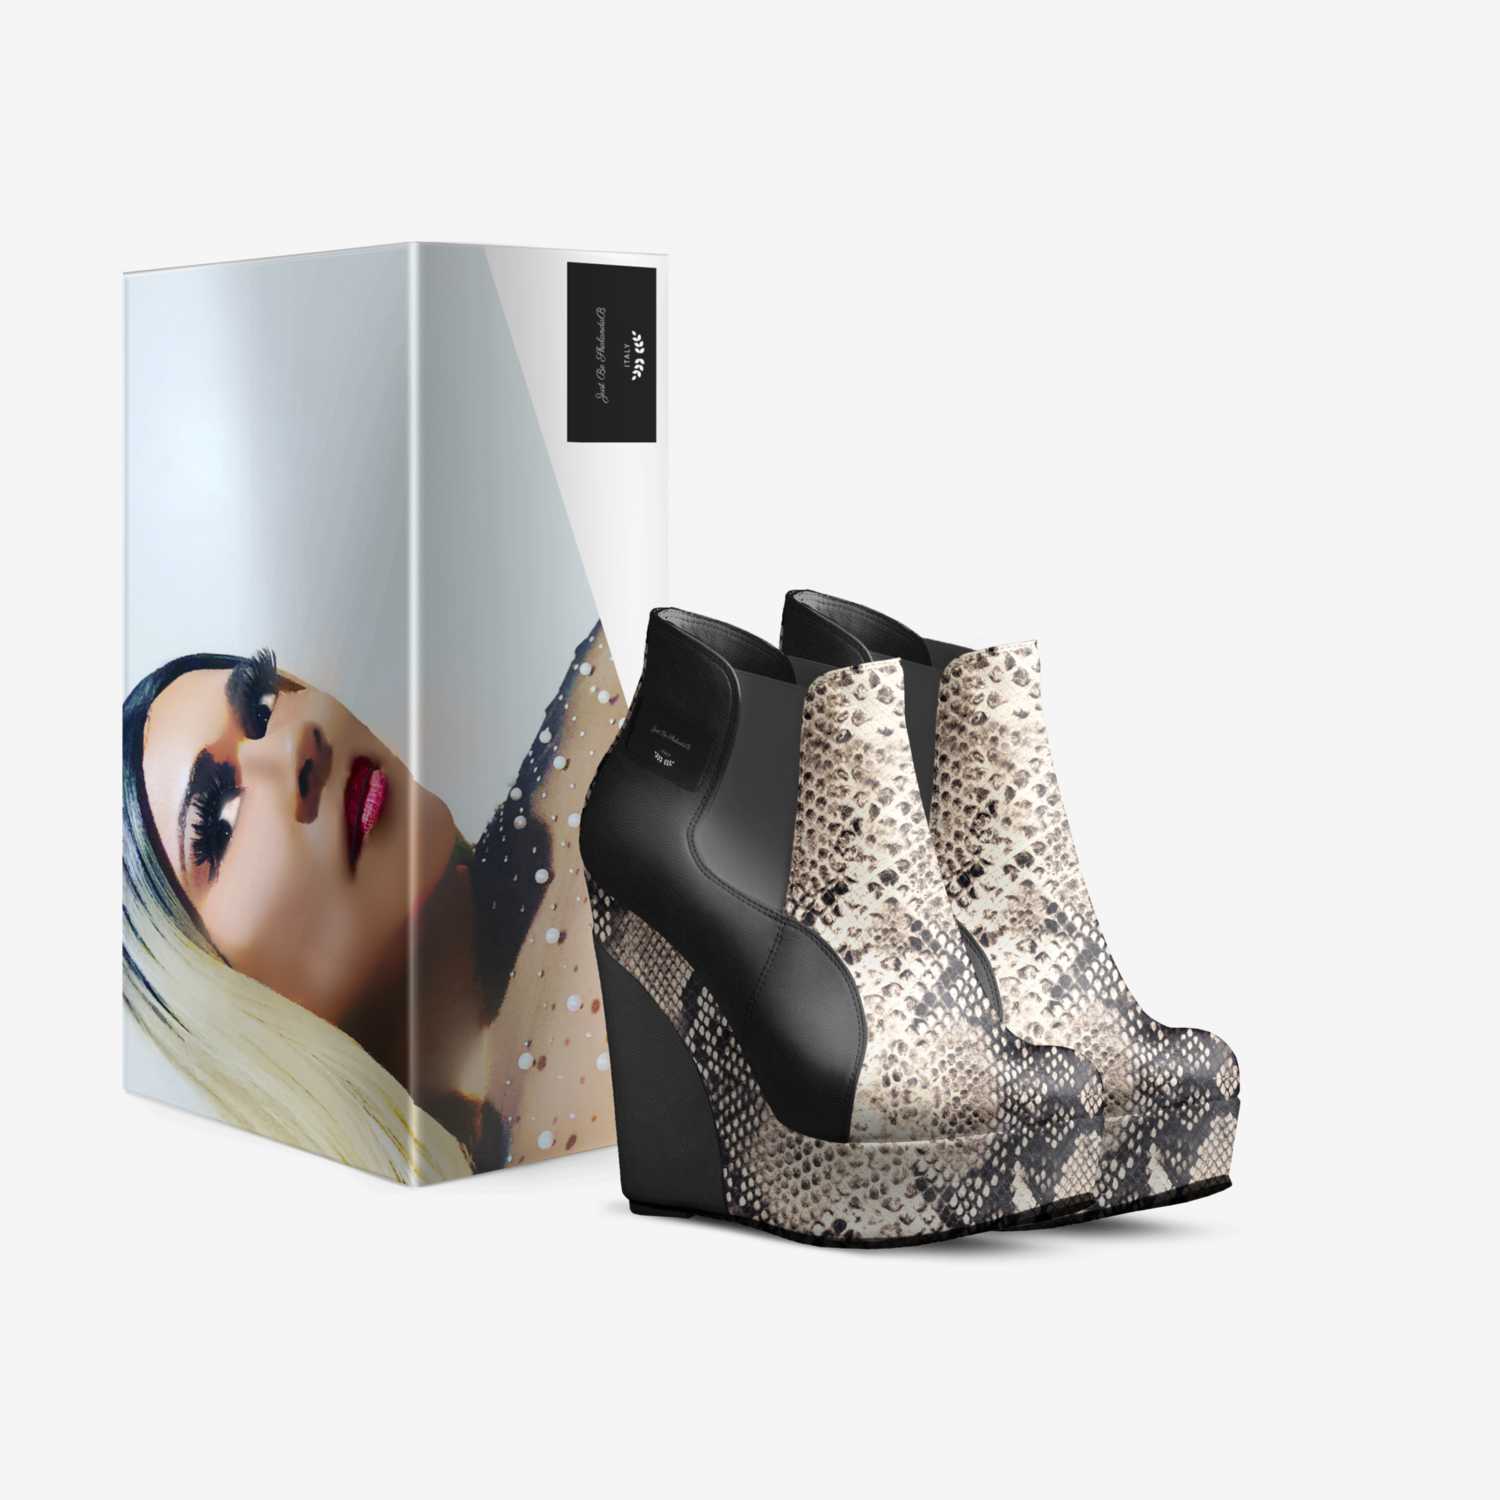 Just Be ShalandaB custom made in Italy shoes by Shalanda Boyce | Box view